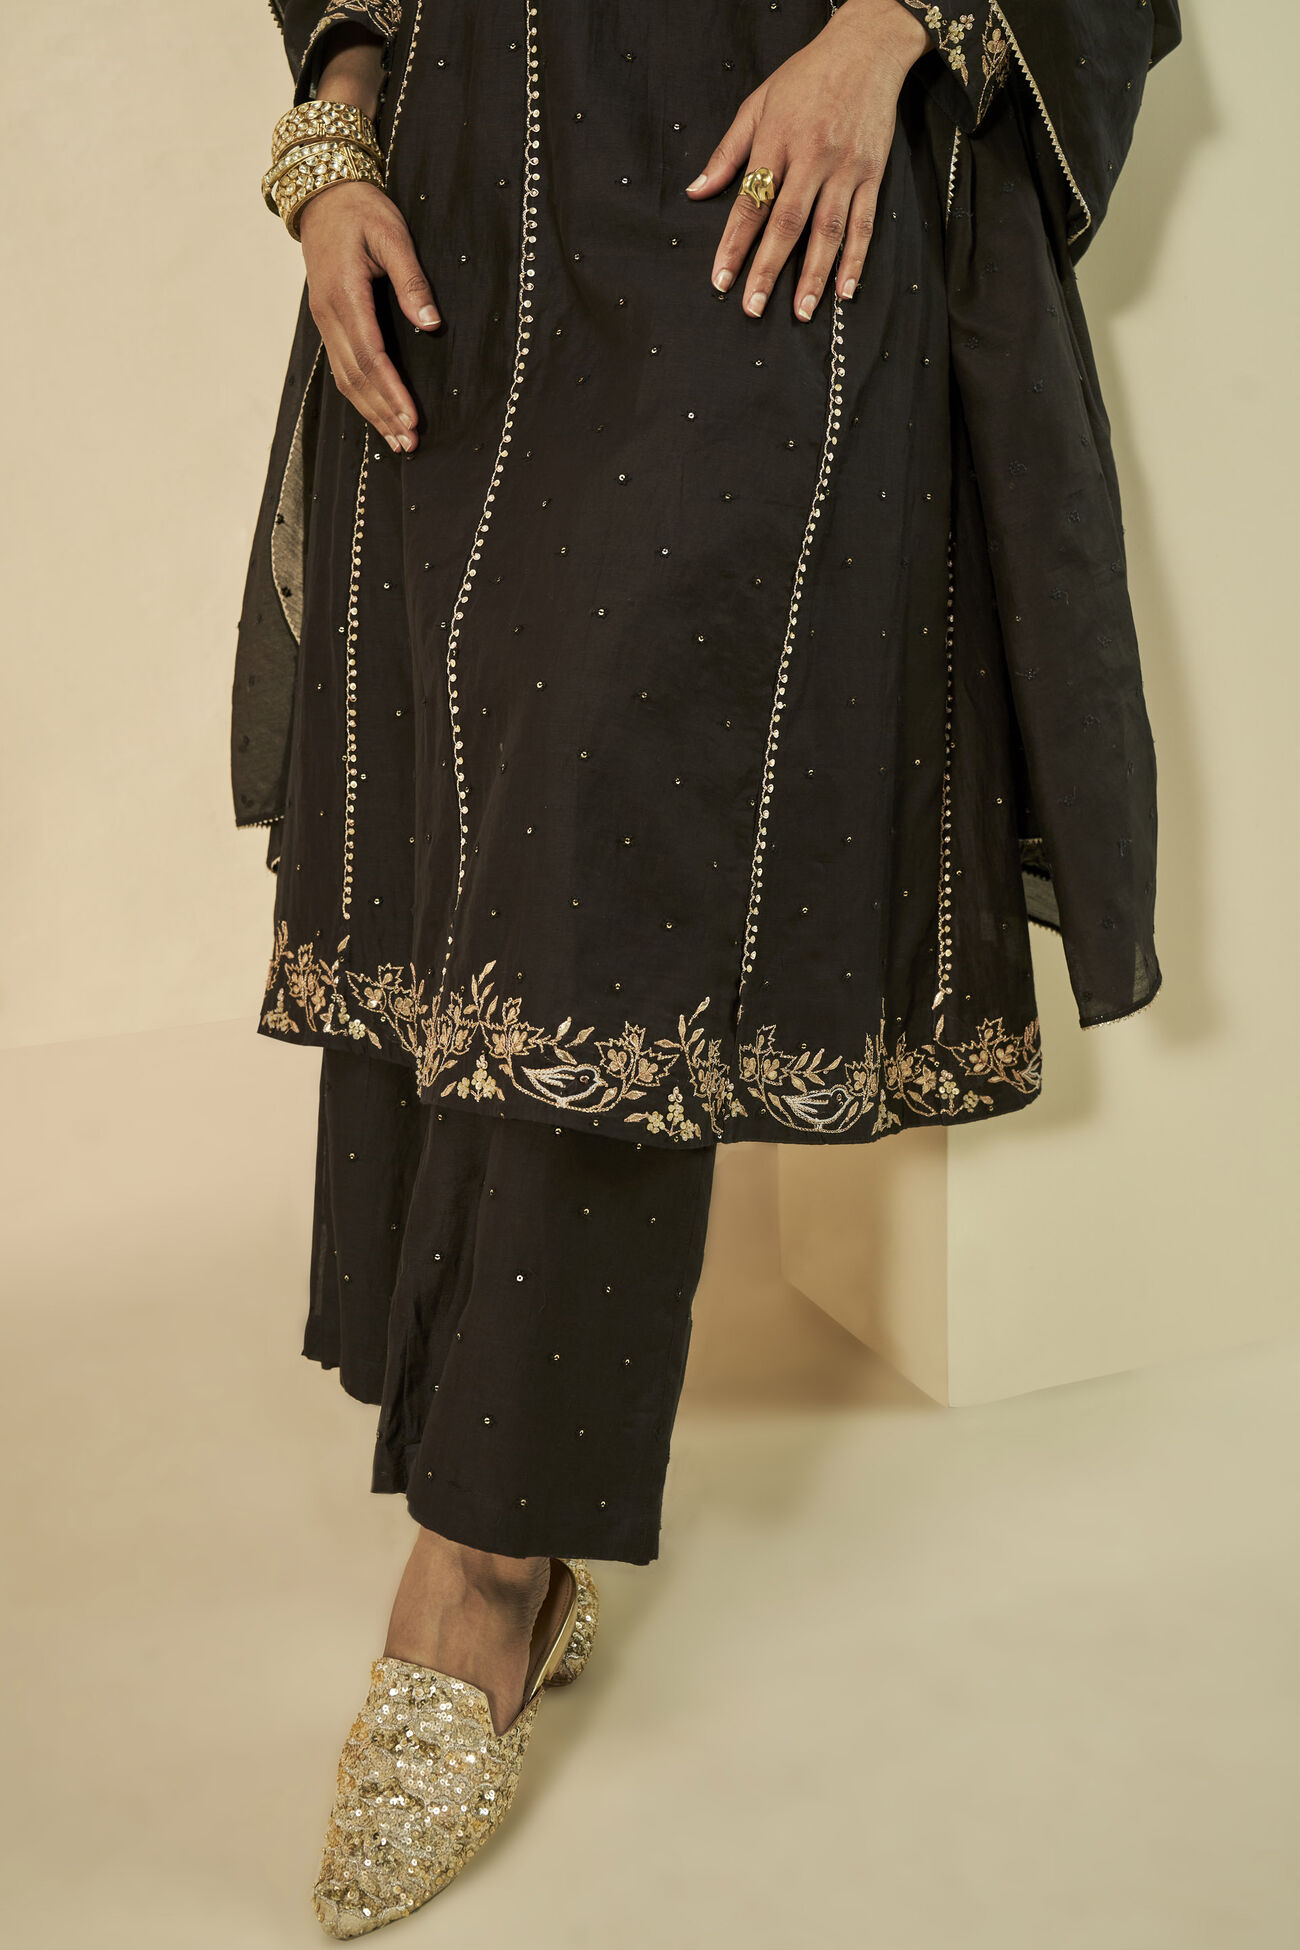 Shahla Gota Patti Embroidered Mul Suit Set - Black, Black, image 7